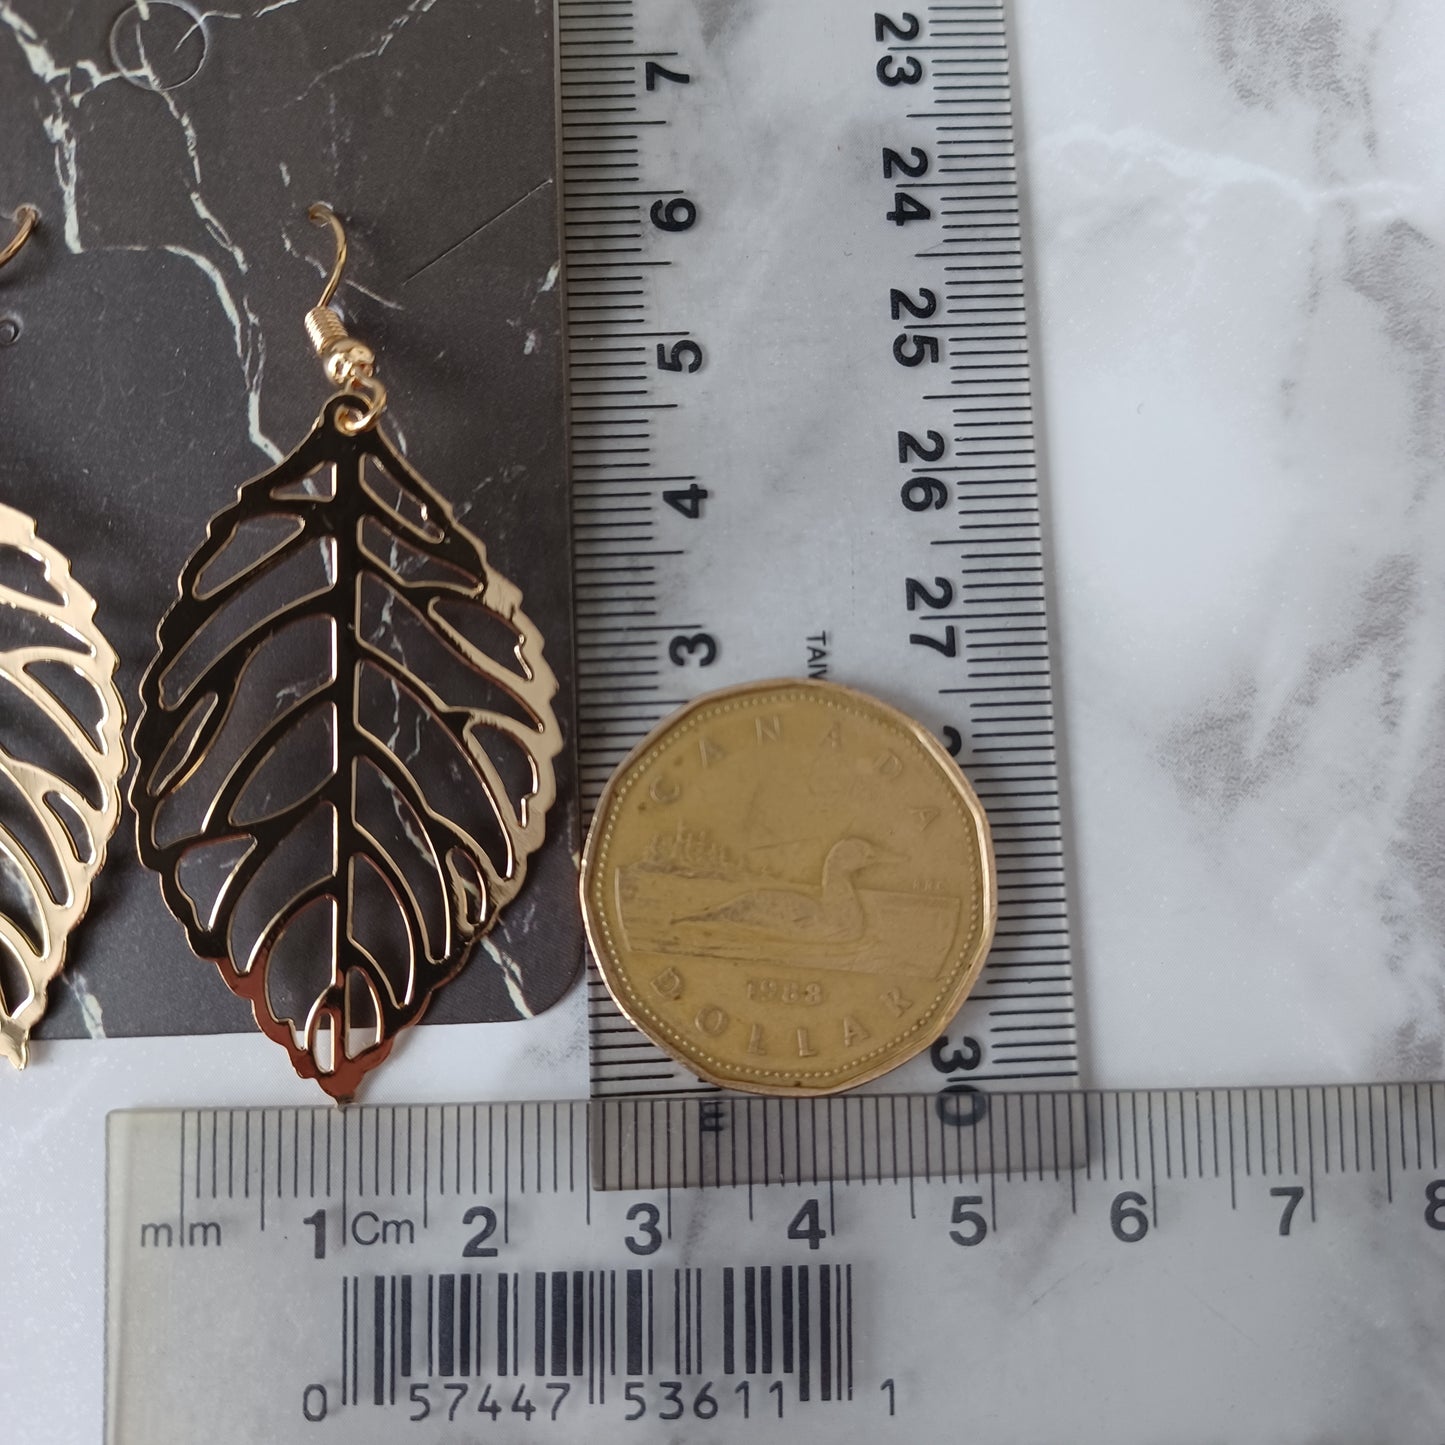 Boucles d'oreilles feuille d'or/Earrings gold leaf